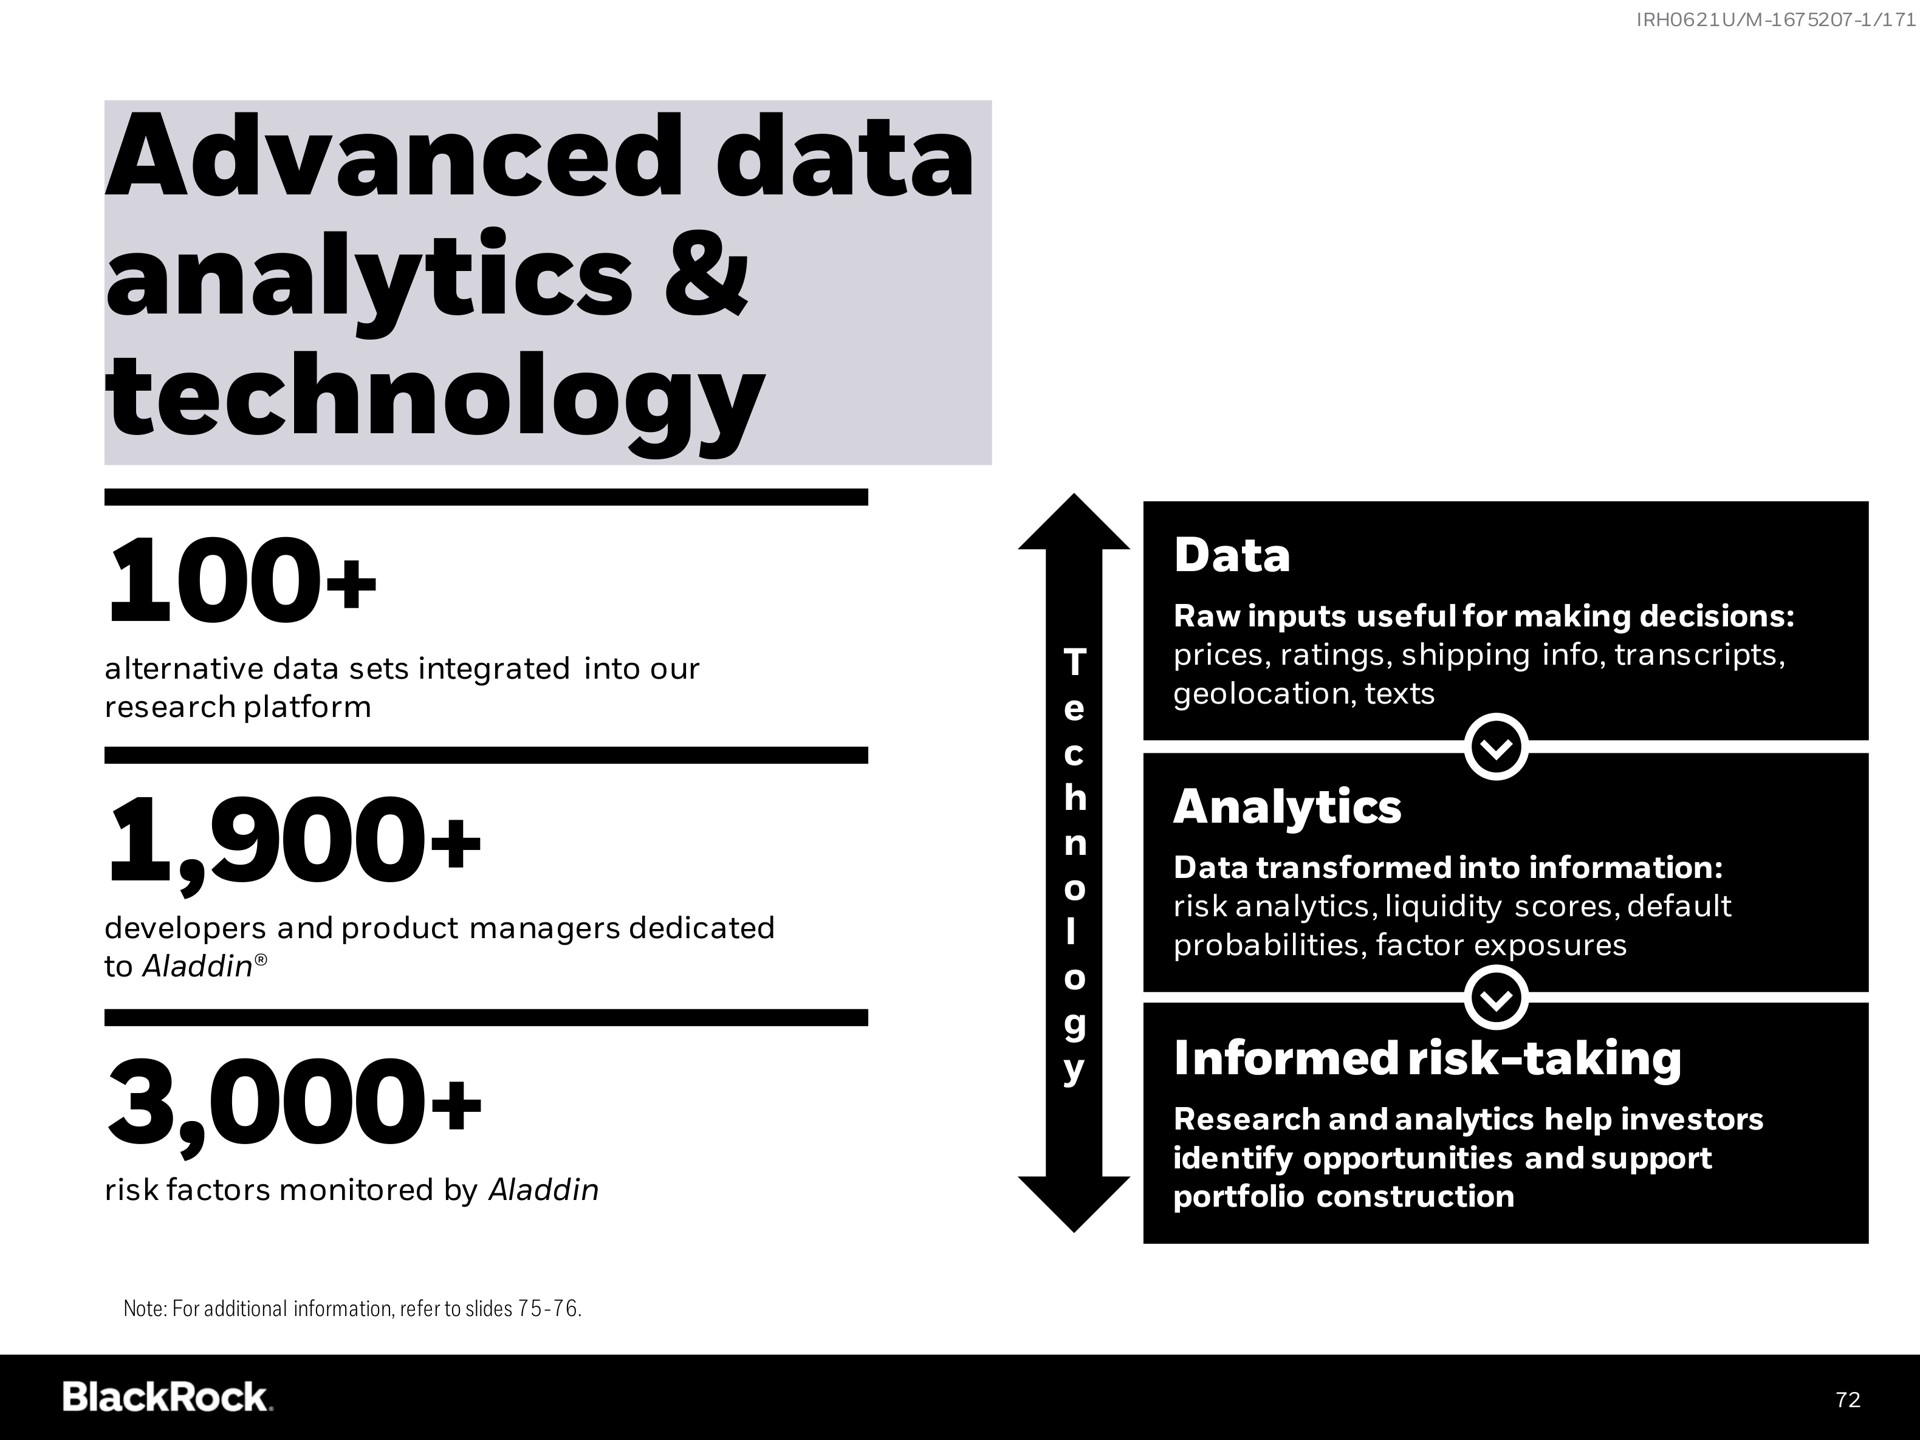 advanced data analytics technology data analytics informed risk taking | BlackRock